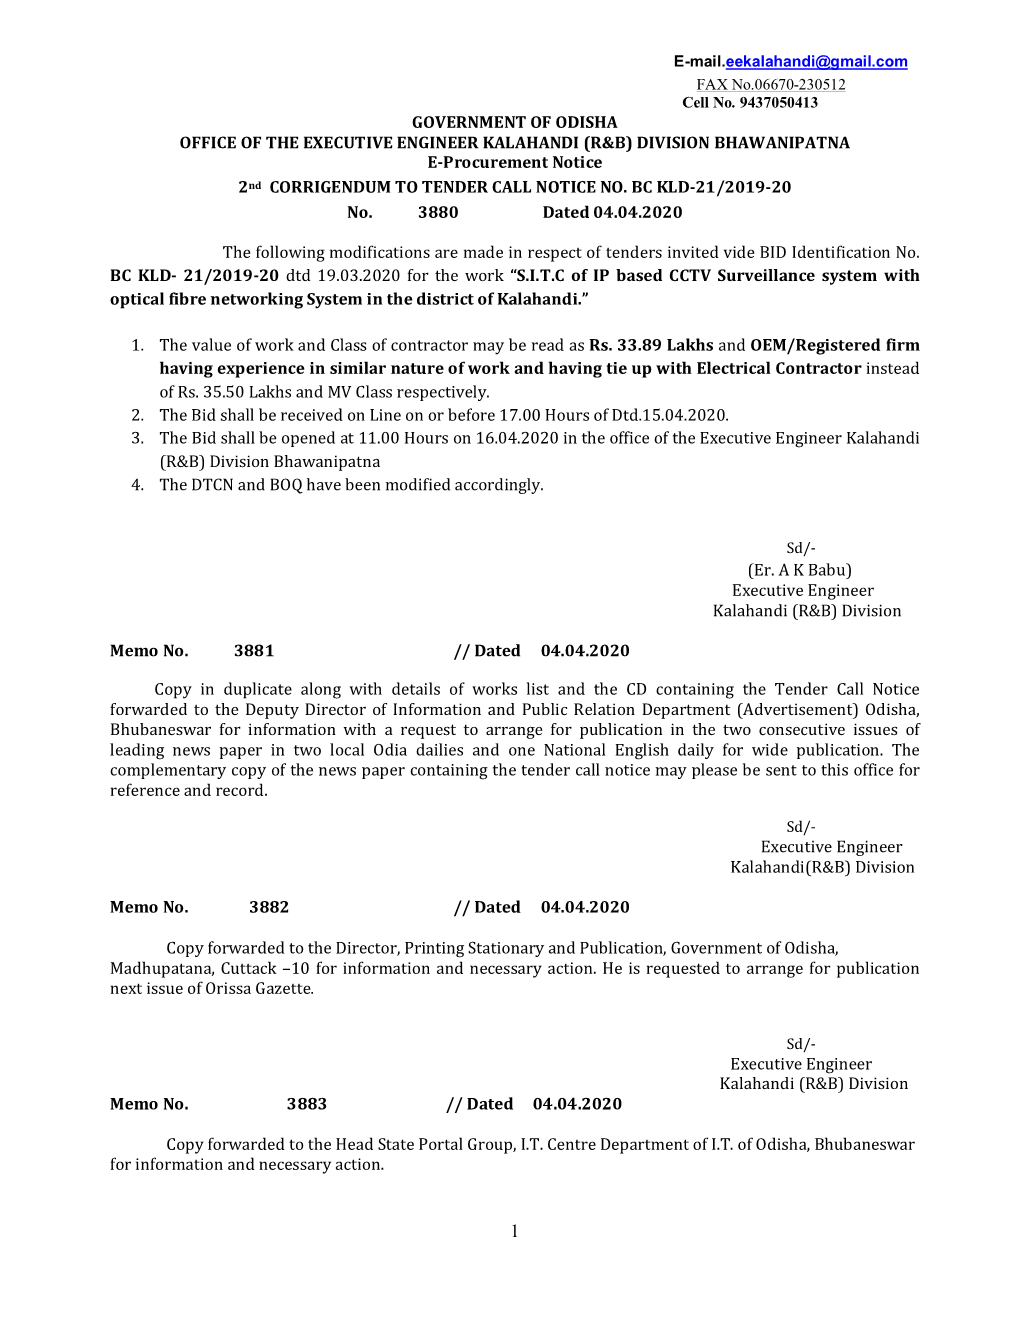 GOVERNMENT of ODISHA OFFICE of the EXECUTIVE ENGINEER KALAHANDI (R&B) DIVISION BHAWANIPATNA E-Procurement Notice 2Nd CORRIGENDUM to TENDER CALL NOTICE NO